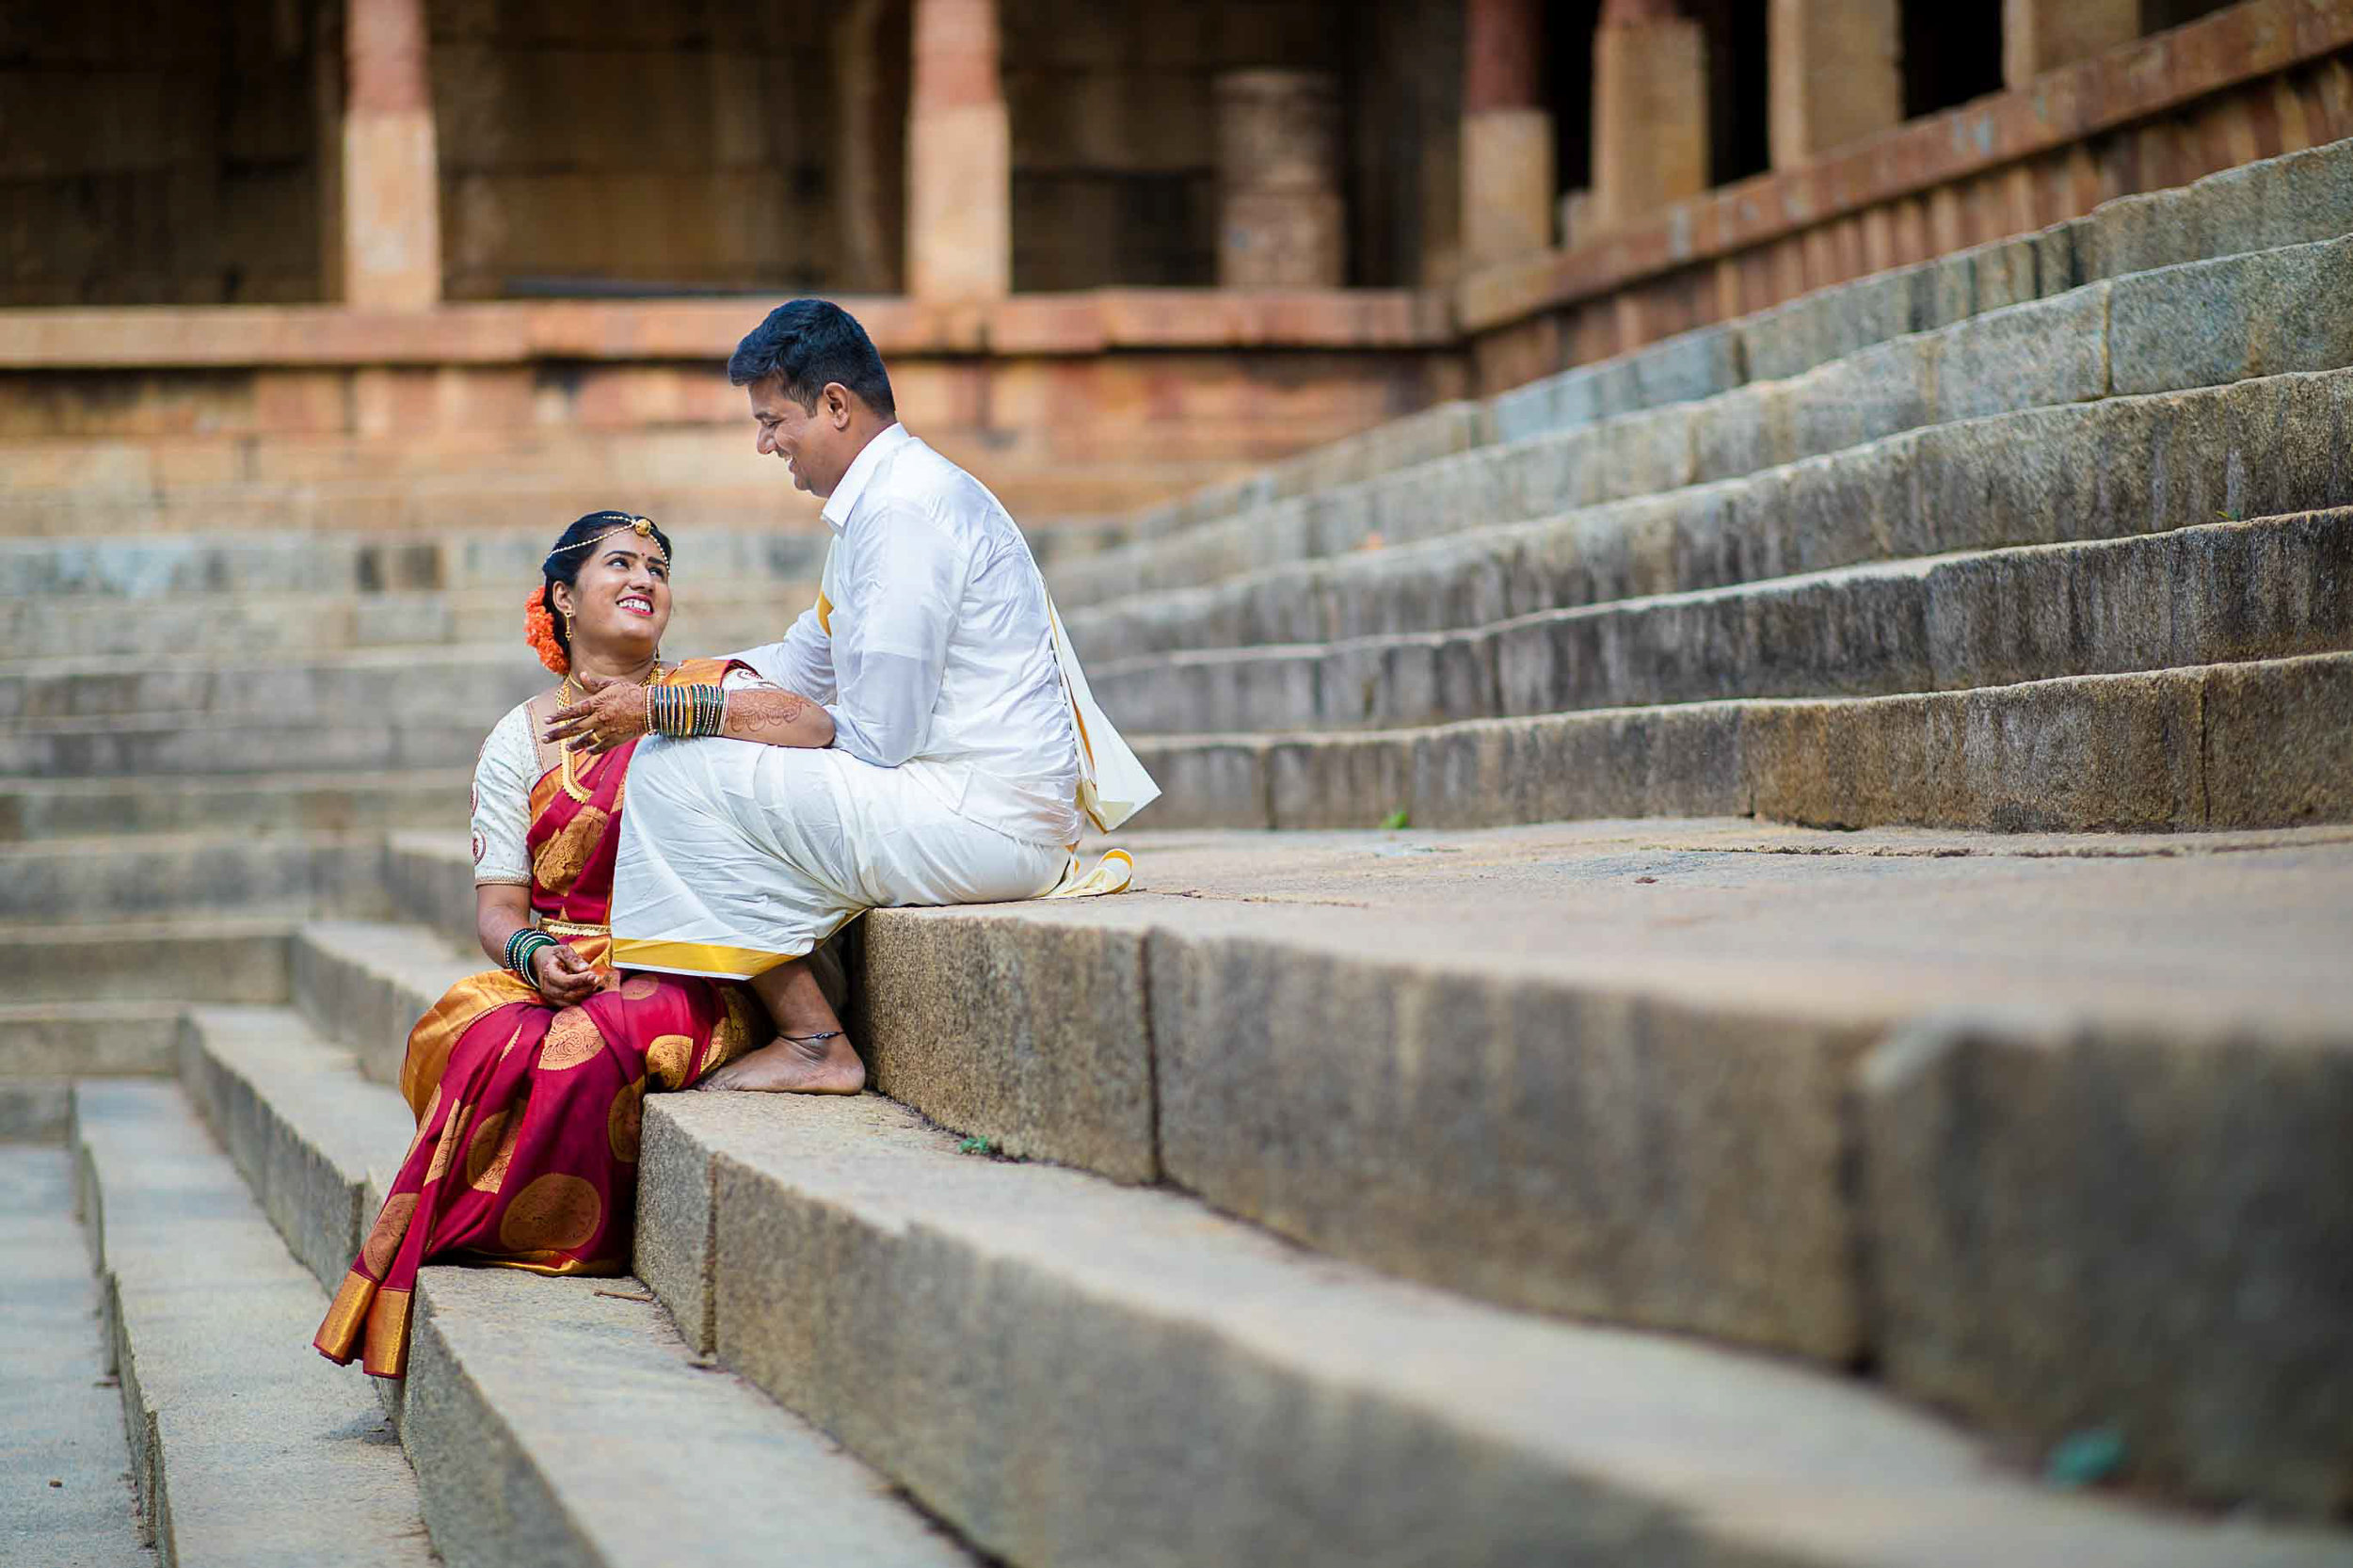 Pixel-Chronicles-Basavaraj_Pooja-bhoganandishwara-temple-Kalyani-Candid-Wedding-Photoshoot-South-Indian-Wedding-Couple-Photoshoot-26.jpg